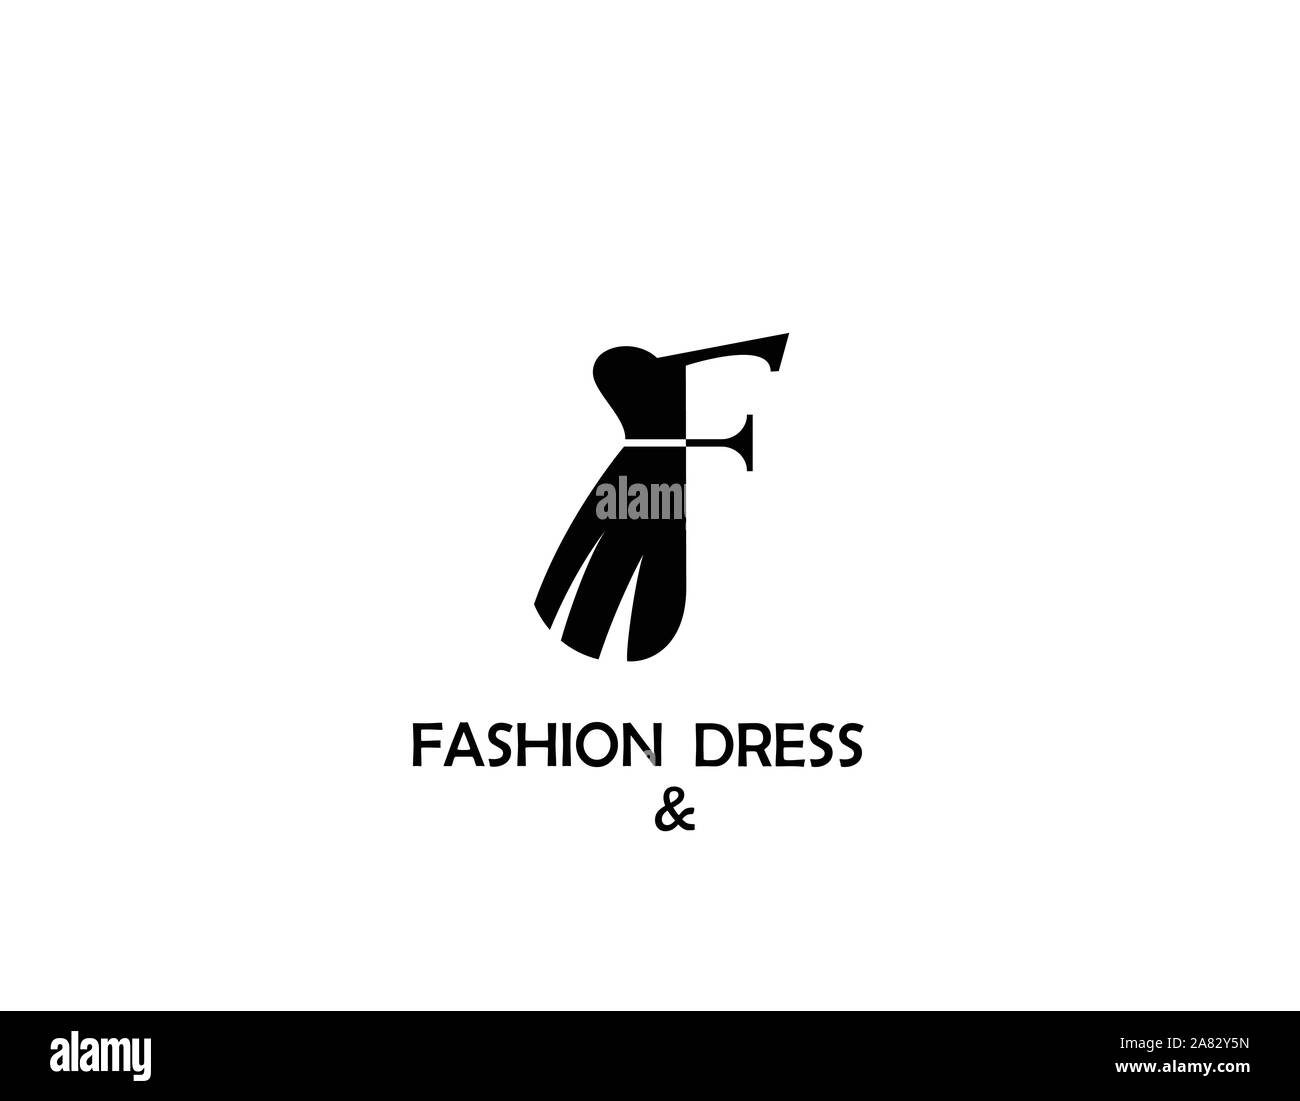 Fashion And Dress Logo Design Stock Vector Image Art Alamy